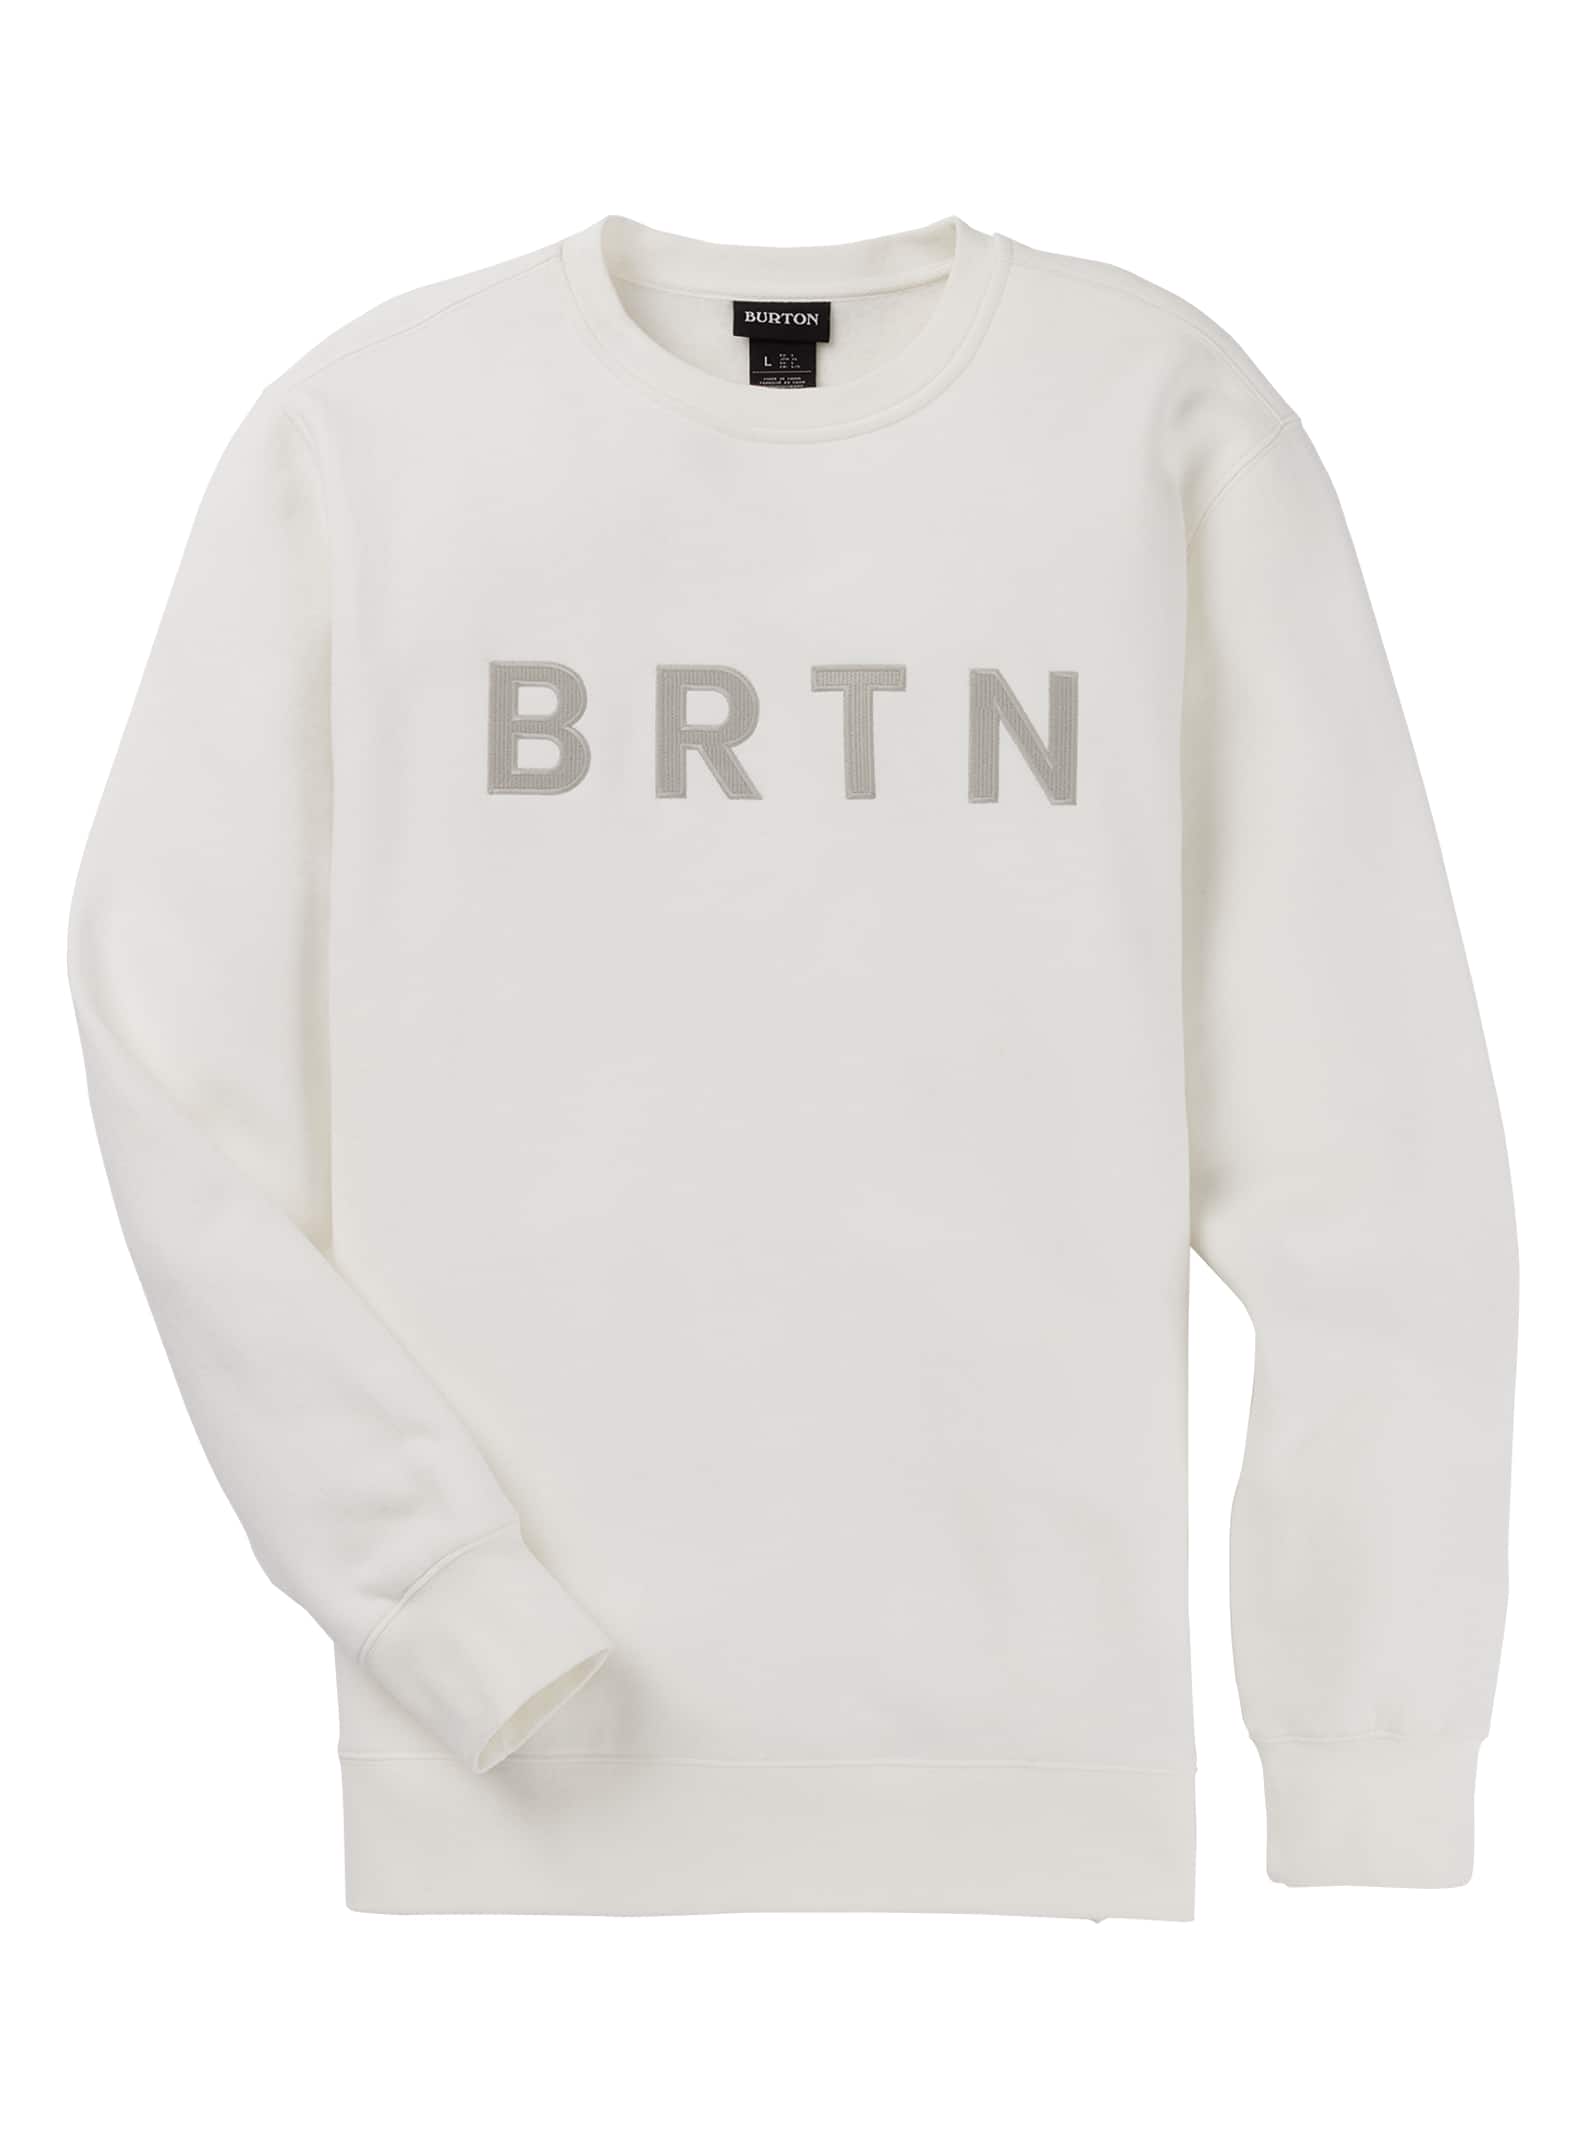 Burton BRTN Crew | Burton.com Winter 2021 US